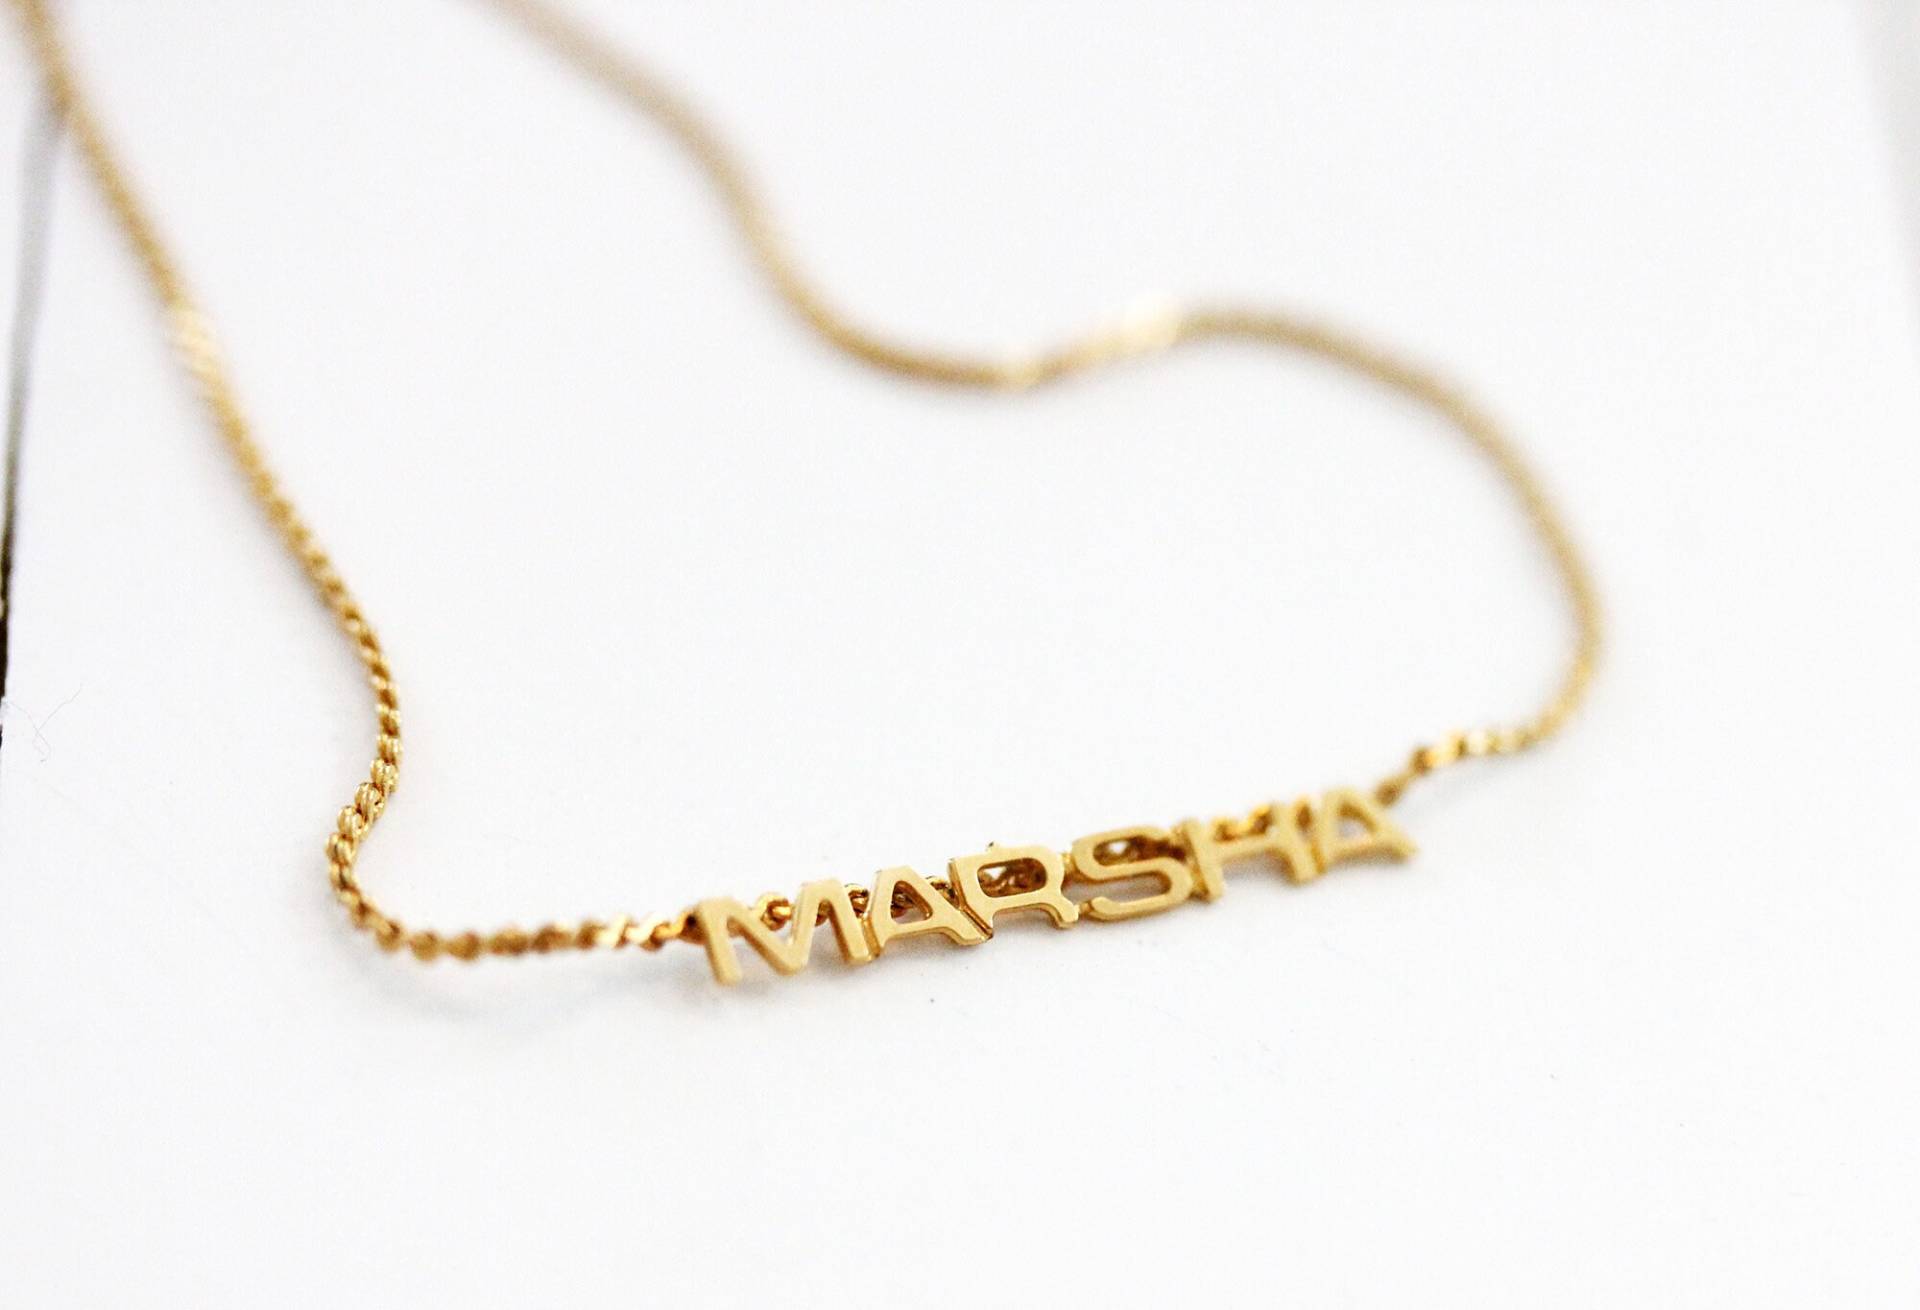 Marsha Namenskette Gold, Namenskette, Vintage Goldkette, Halskette von diamentdesigns